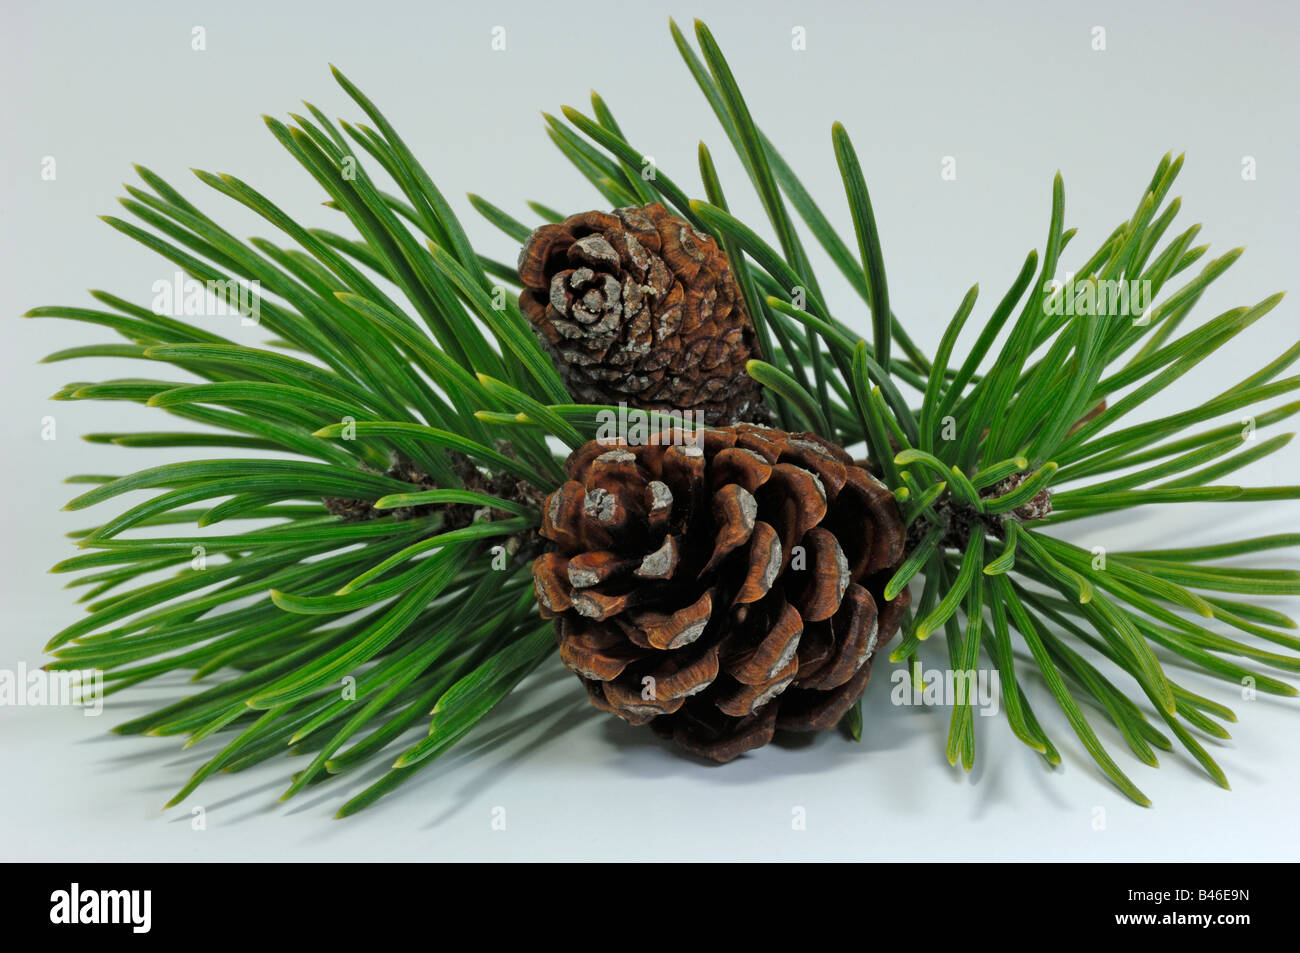 Dwarf Mountain Pine, Mountain Pine, Swiss Mountain Pine (Pinus mugo) twig with cones studio picture Stock Photo